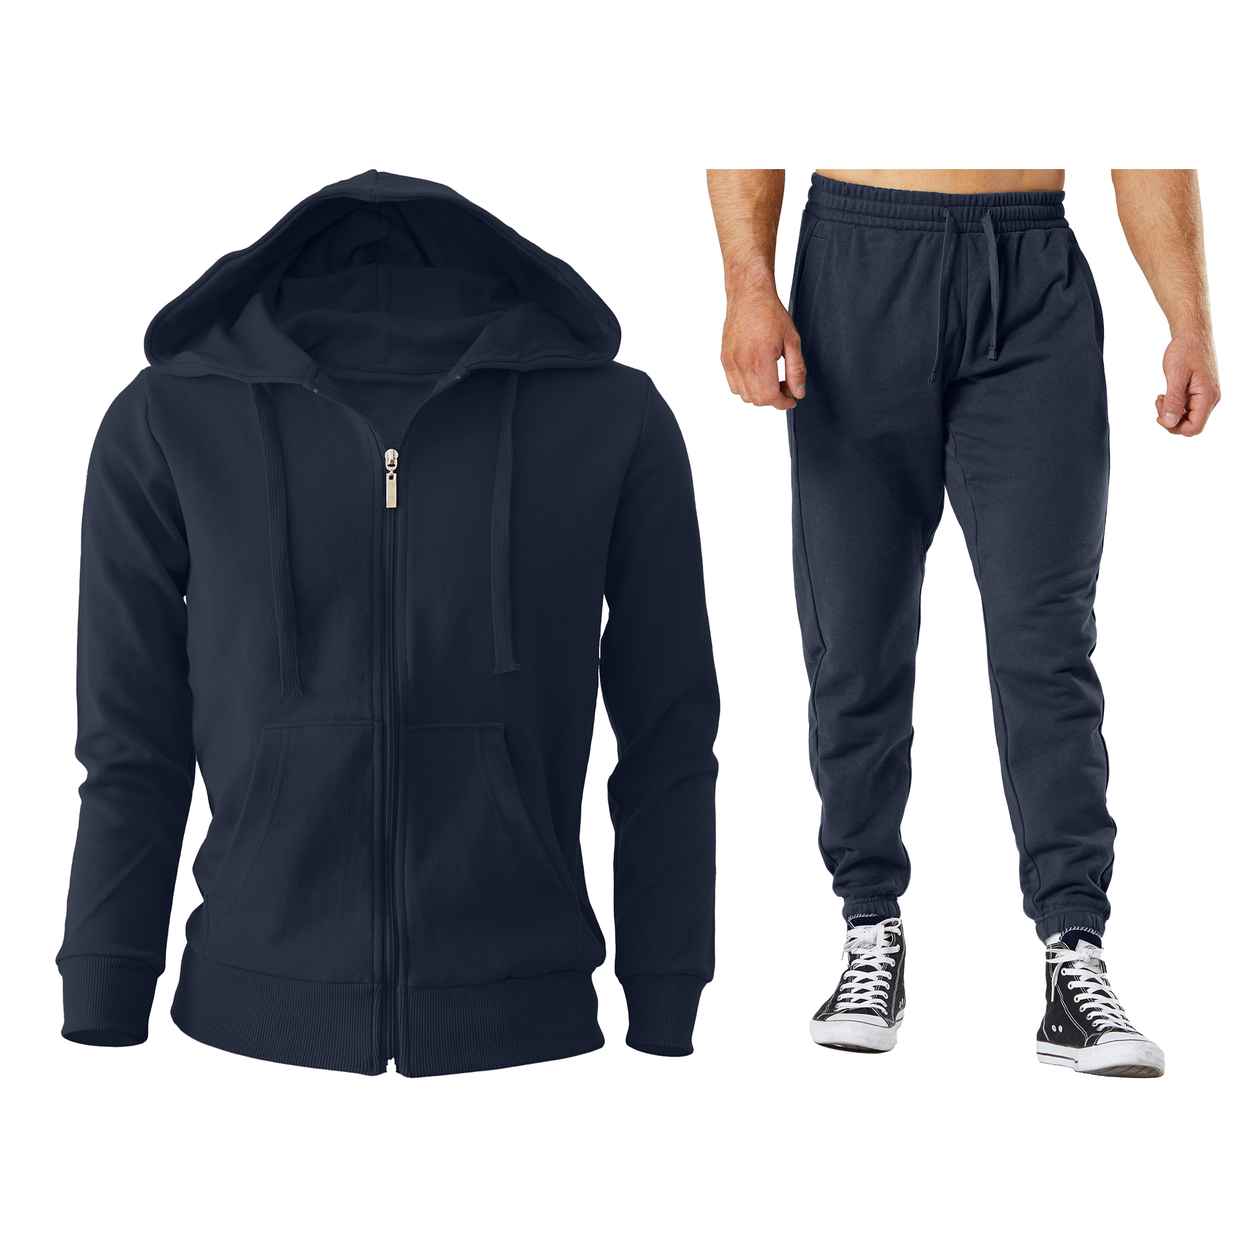 2-Piece: Men's Winter Warm Cozy Athletic Multi-Pockets BIG & TALL Sweatsuit Set - Grey, 3xl